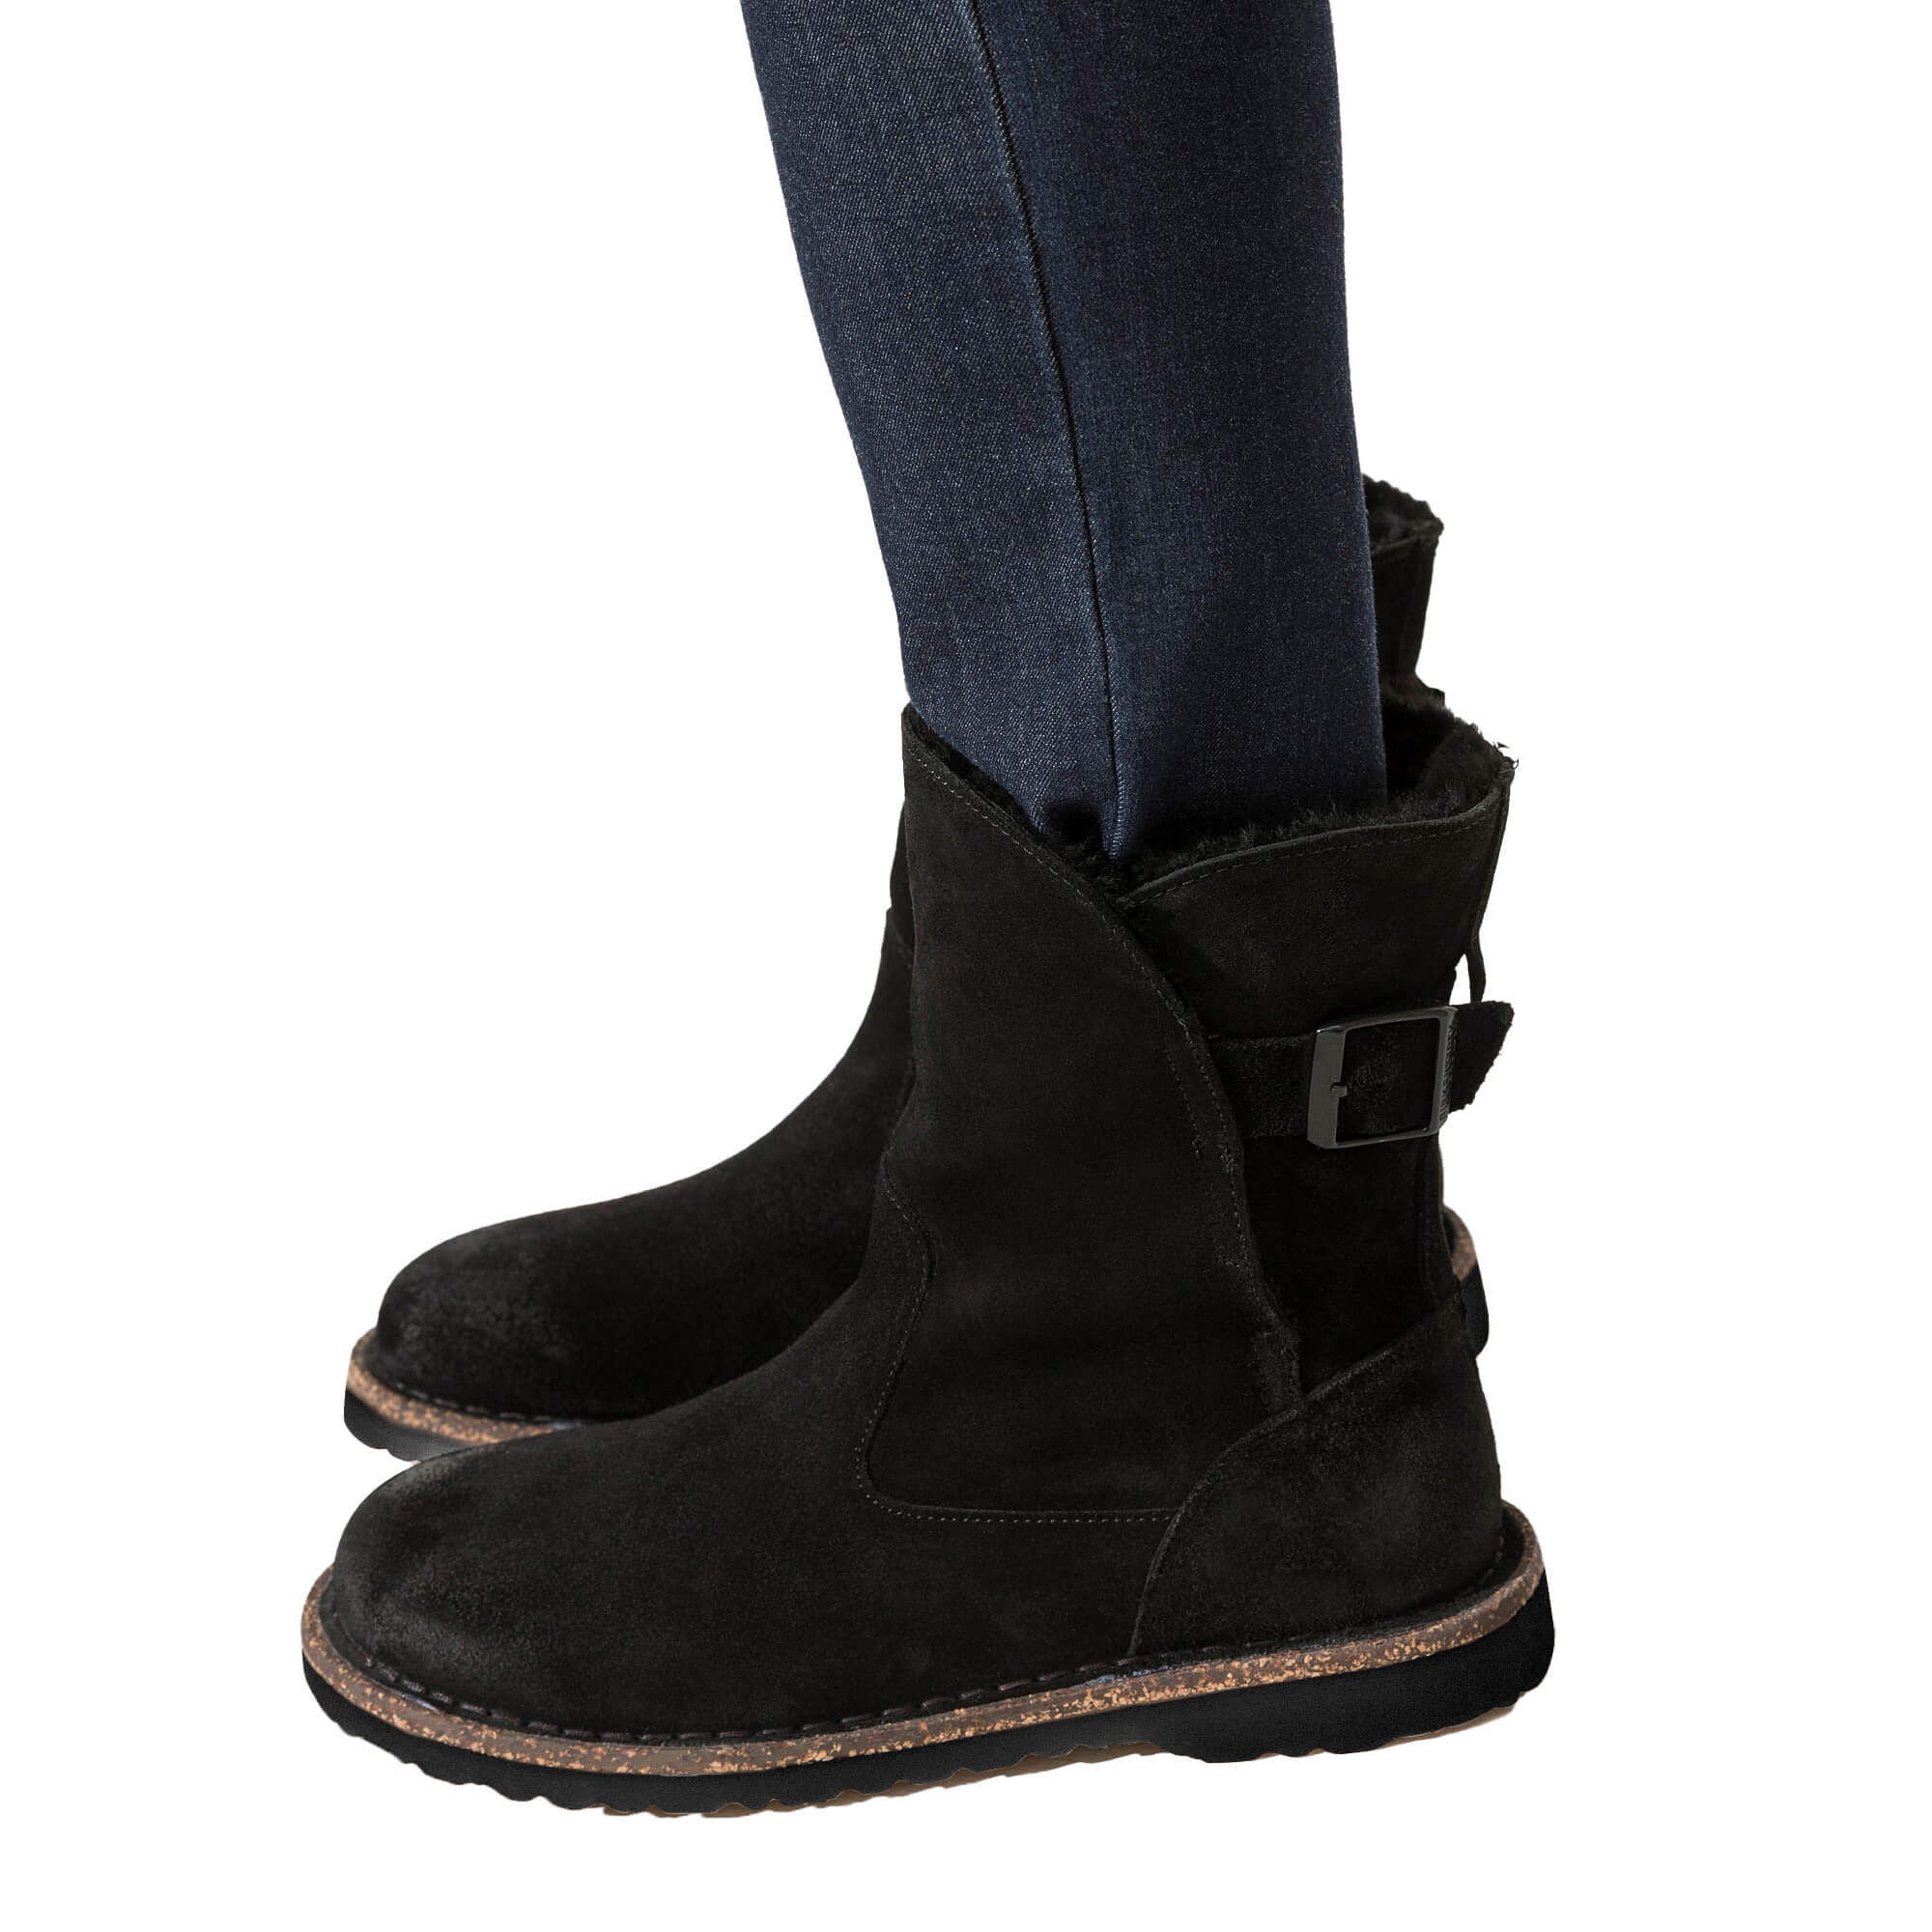 Birkenstock Uppsala Shearling Suede Narrow Women's Snow Boots